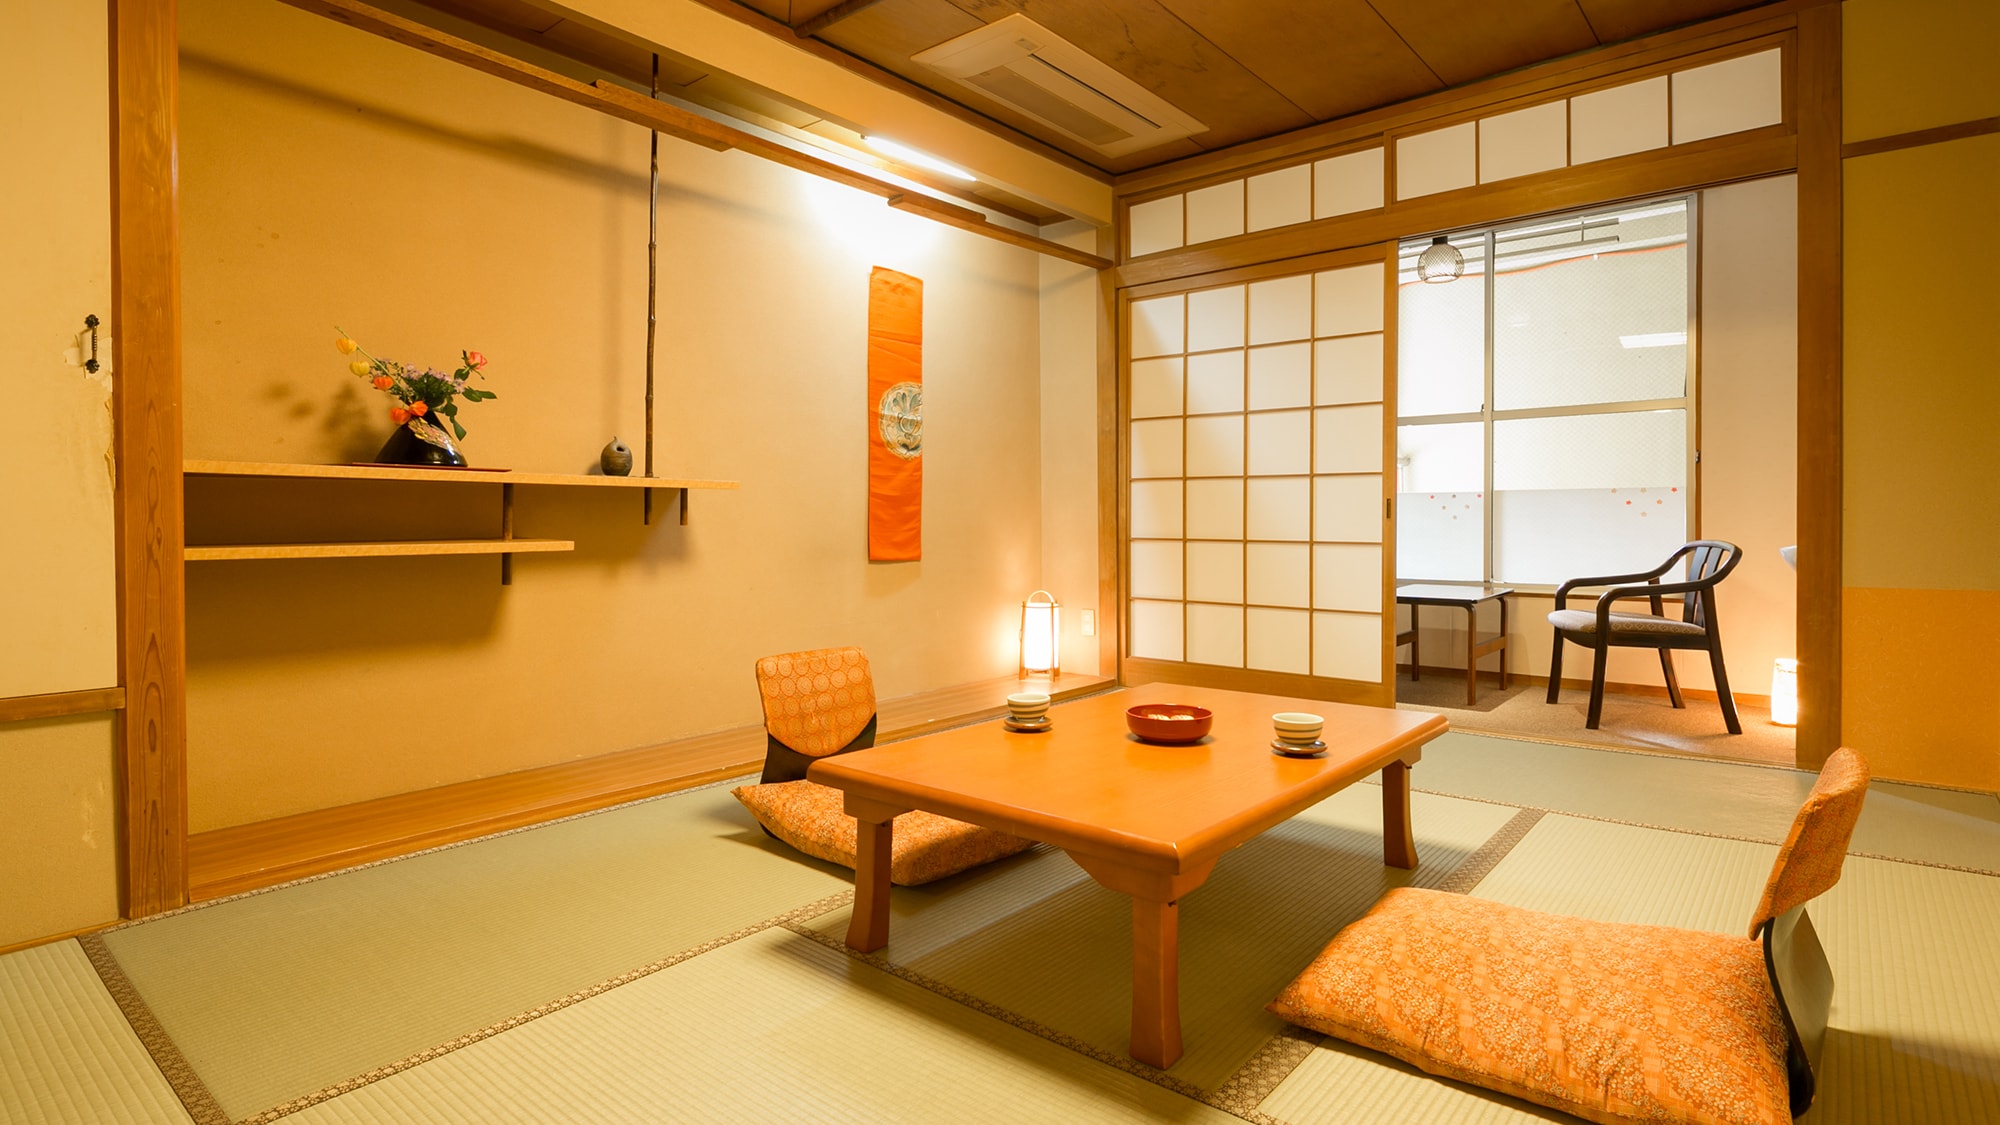 Kamar bergaya Jepang 7,5 tikar tatami Agak sempit, tapi itu ukuran yang sempurna untuk orang favorit Anda!